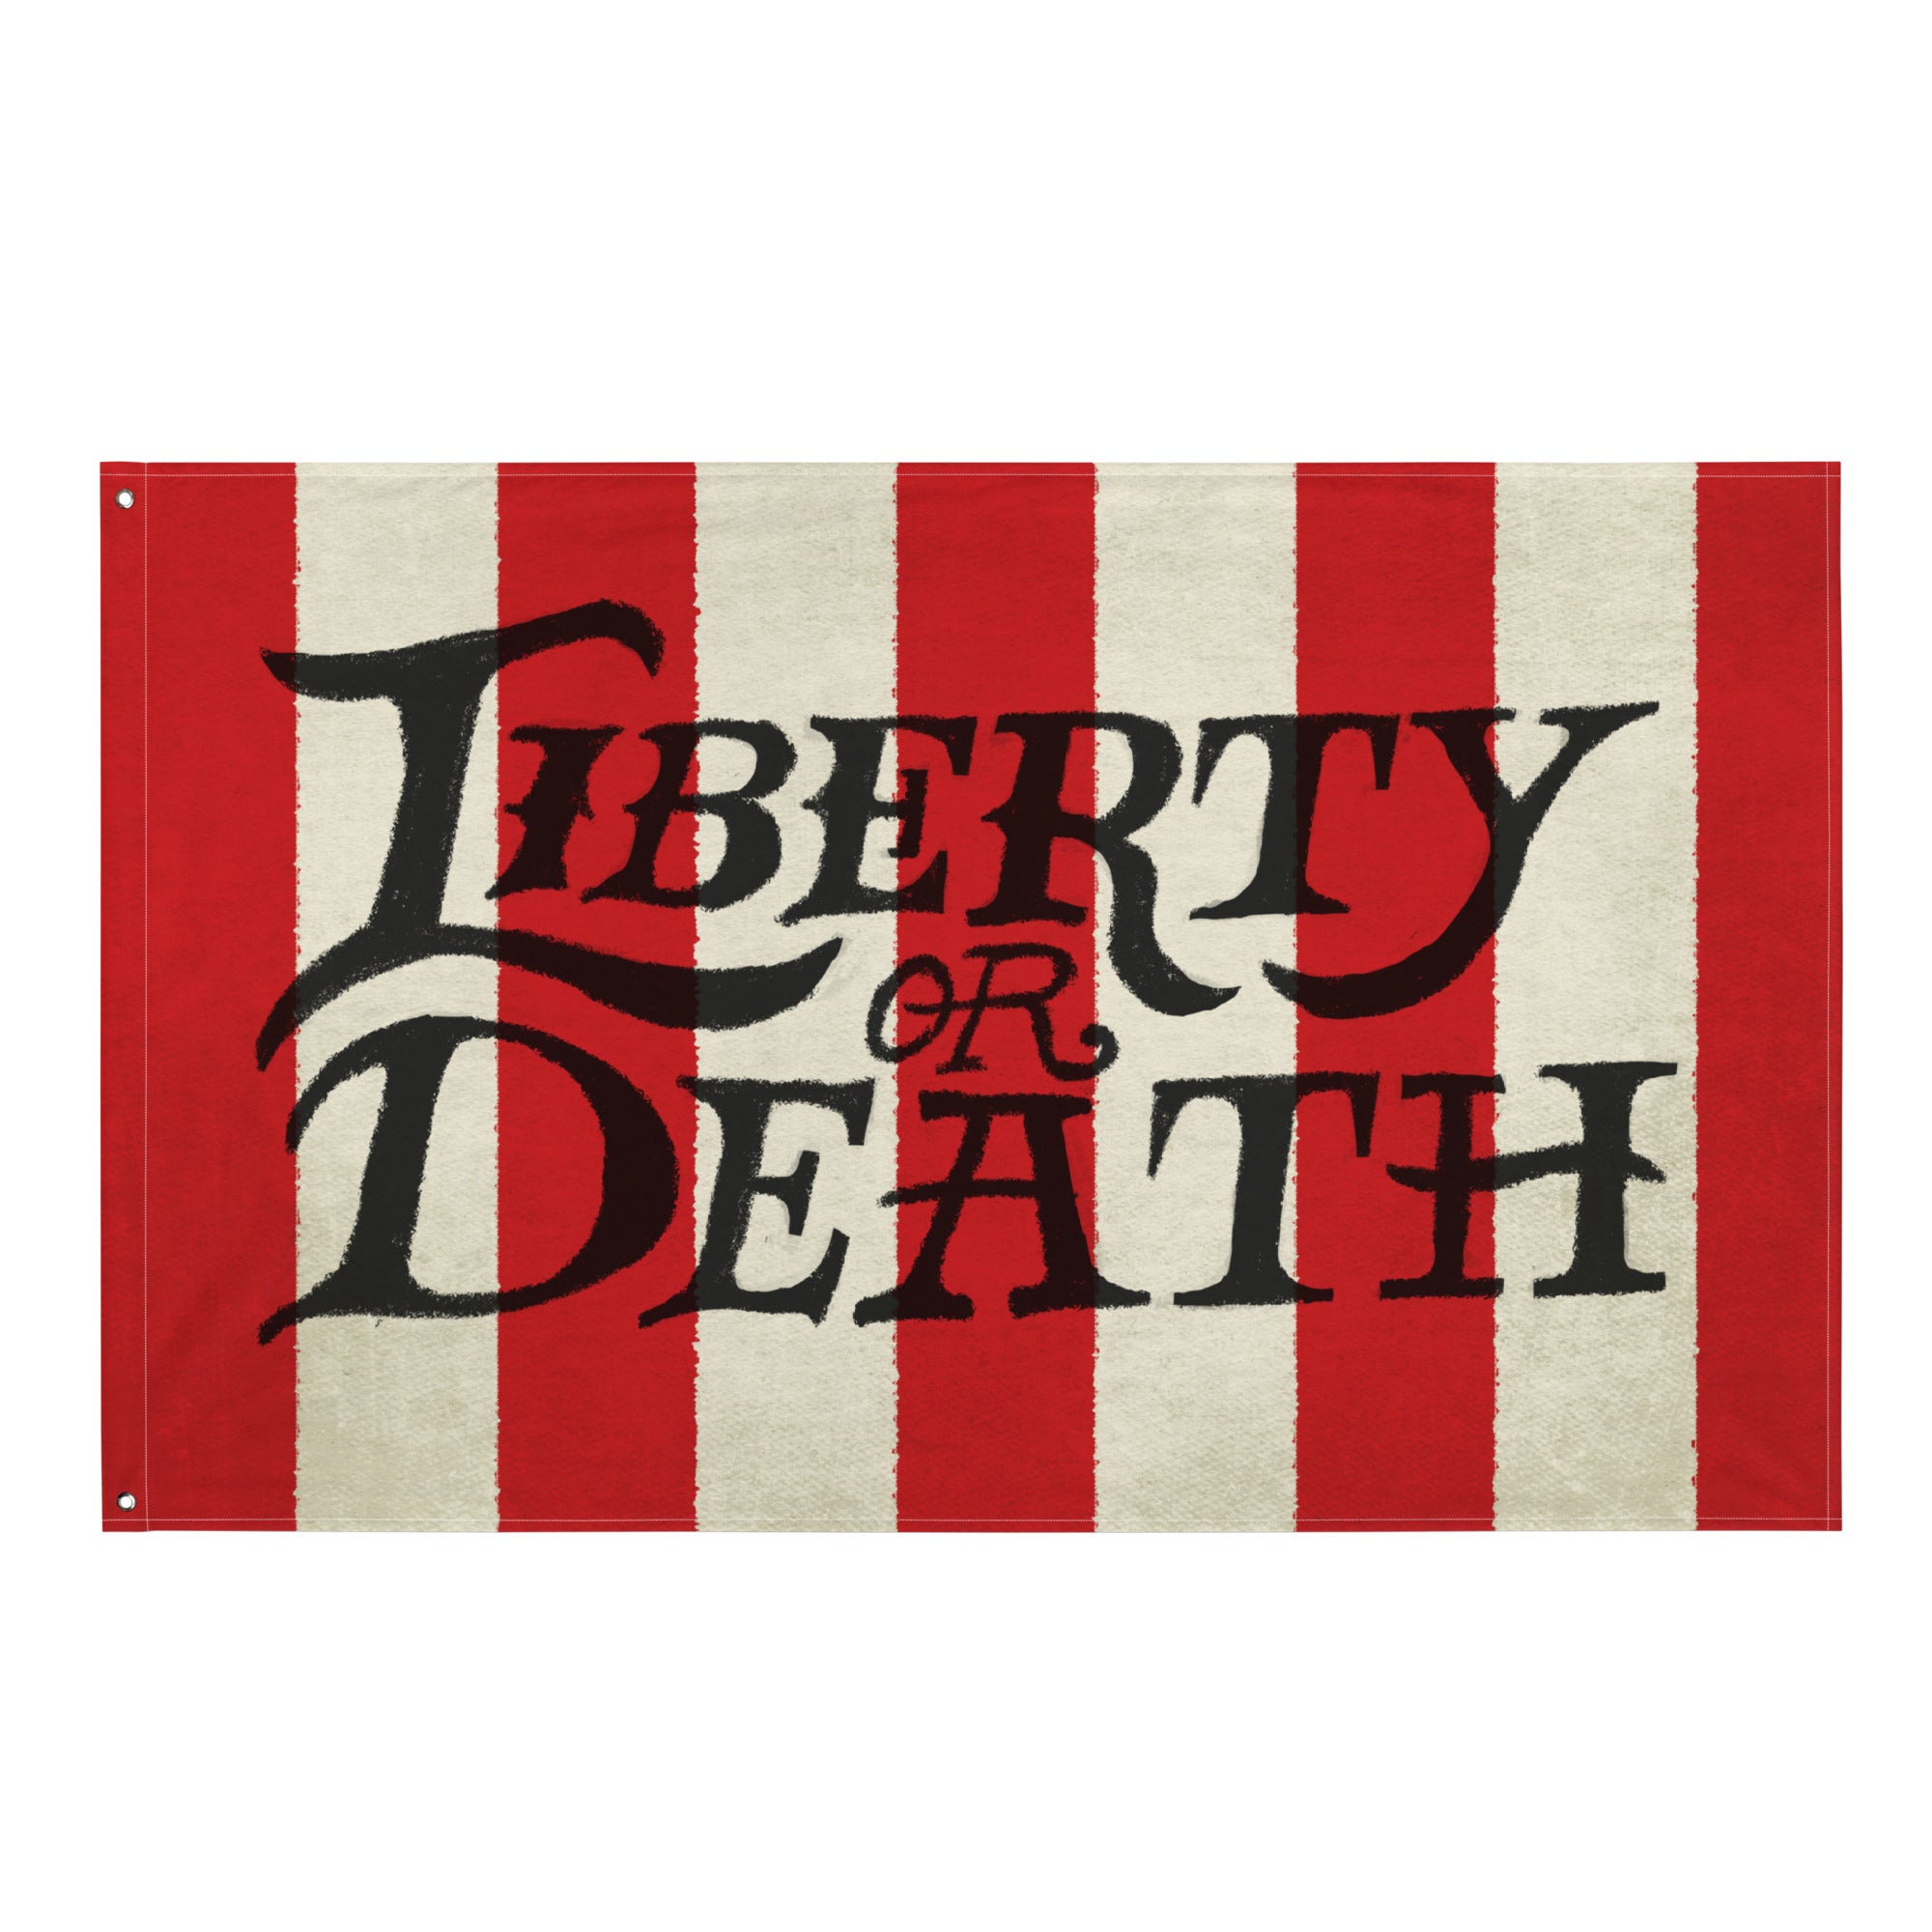 Whiskey Rebellion Liberty or Death Flag